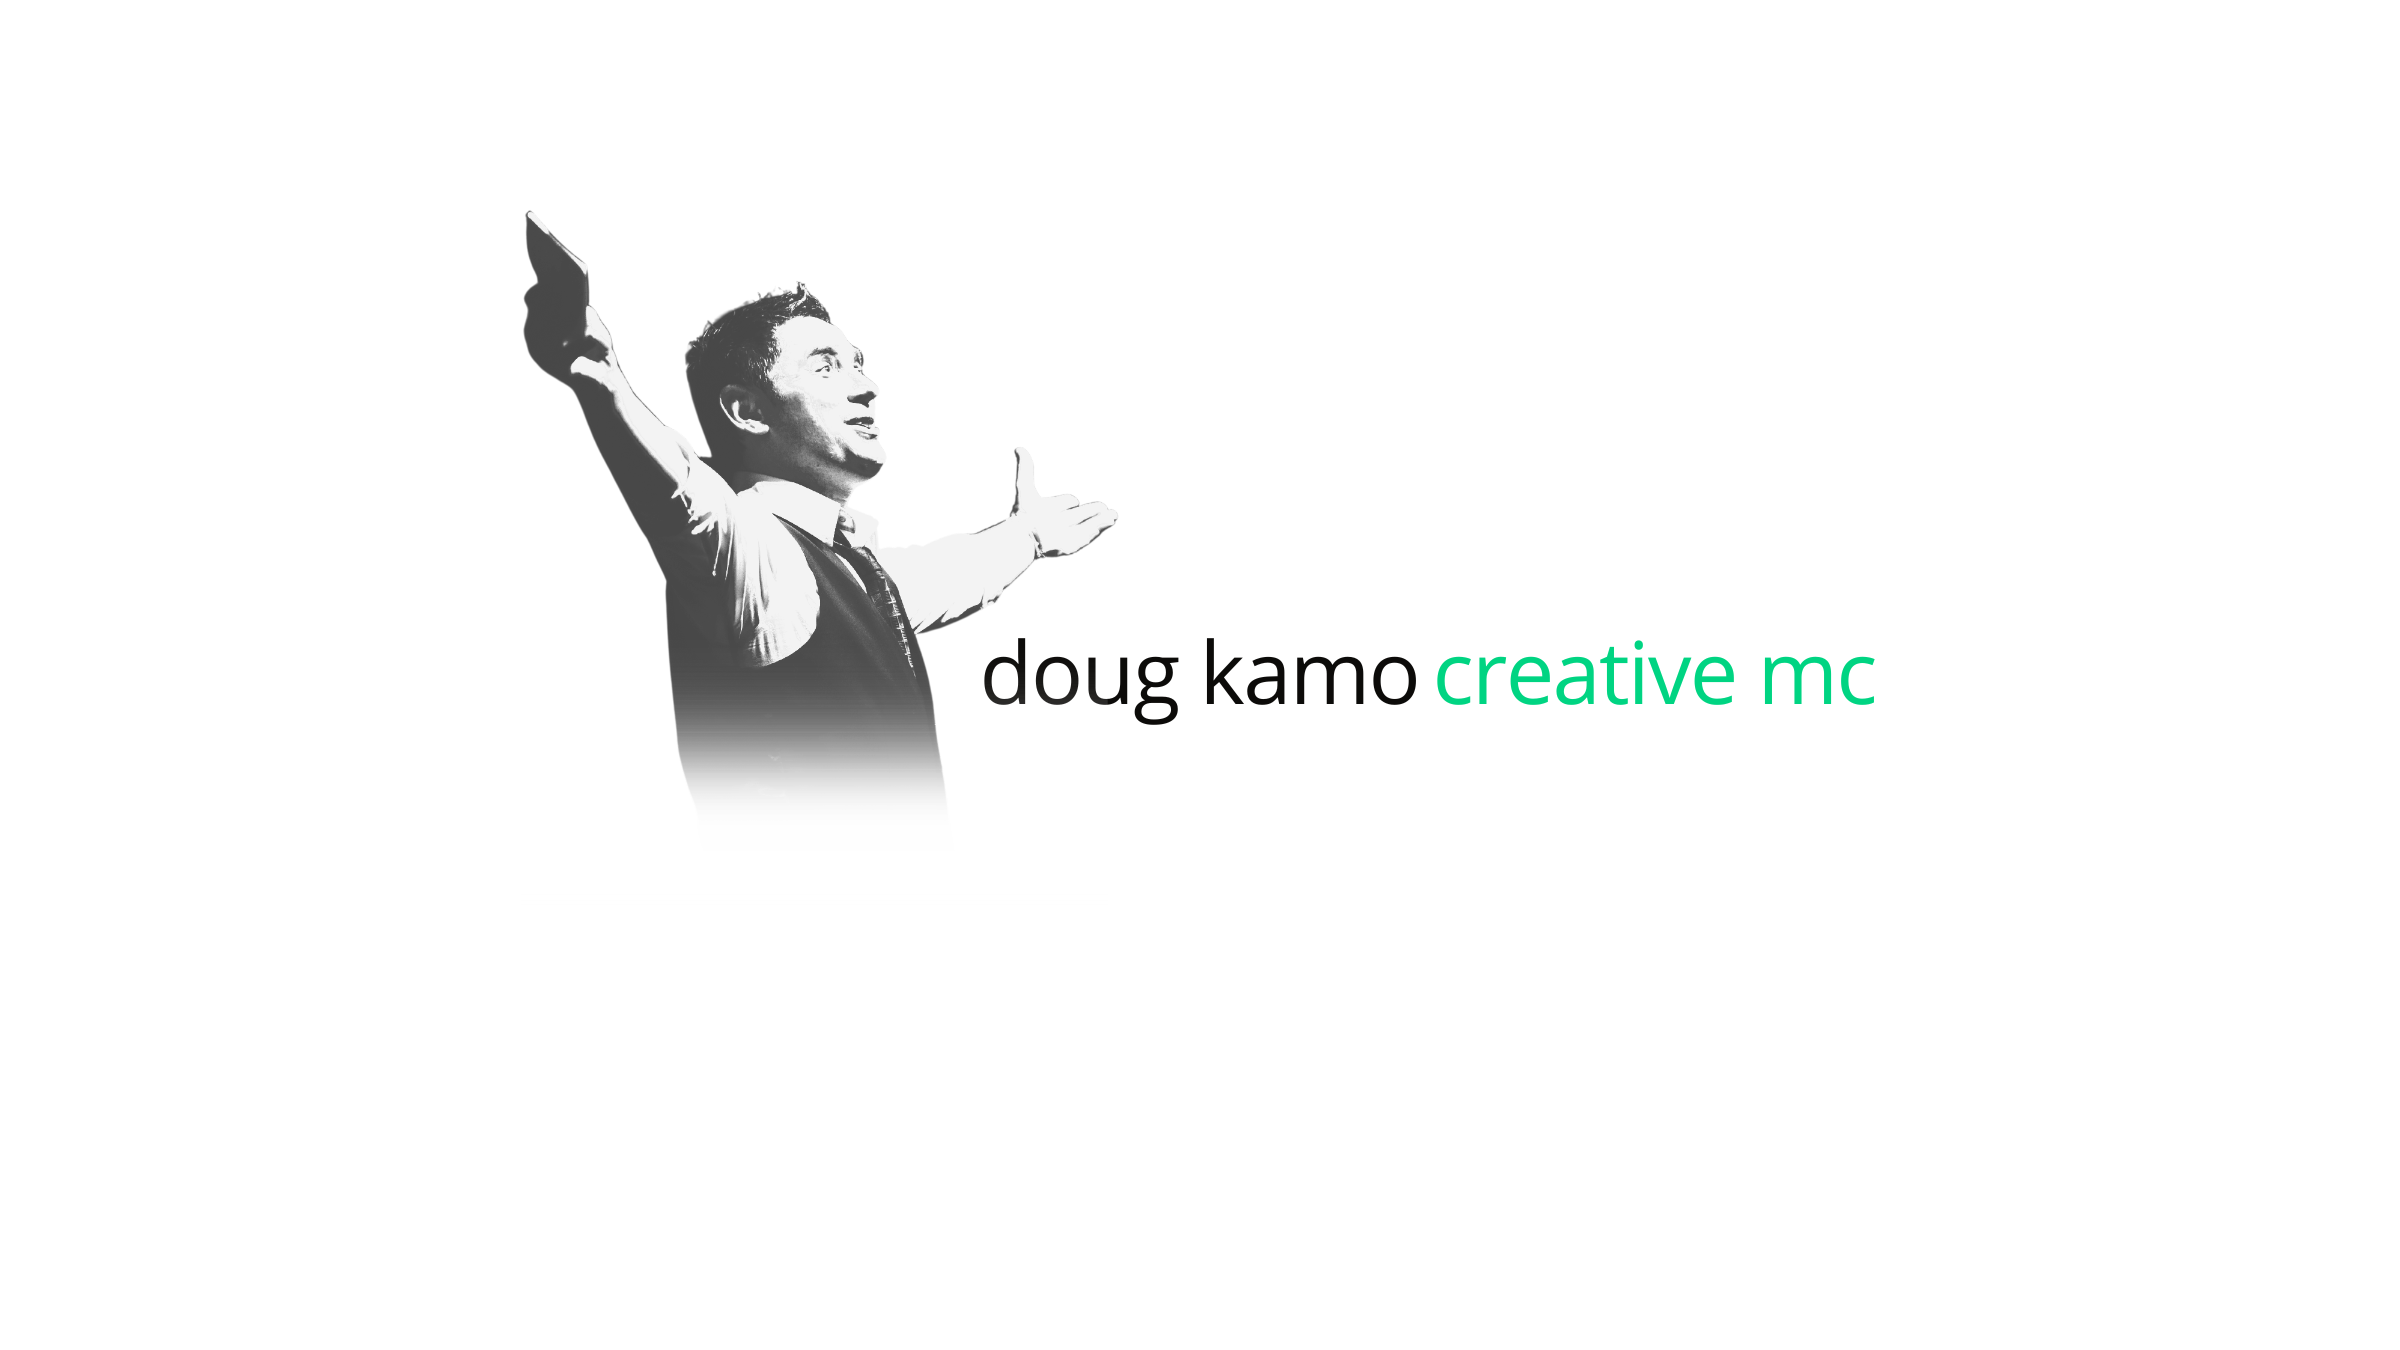 
Doug Kamo Creative MC